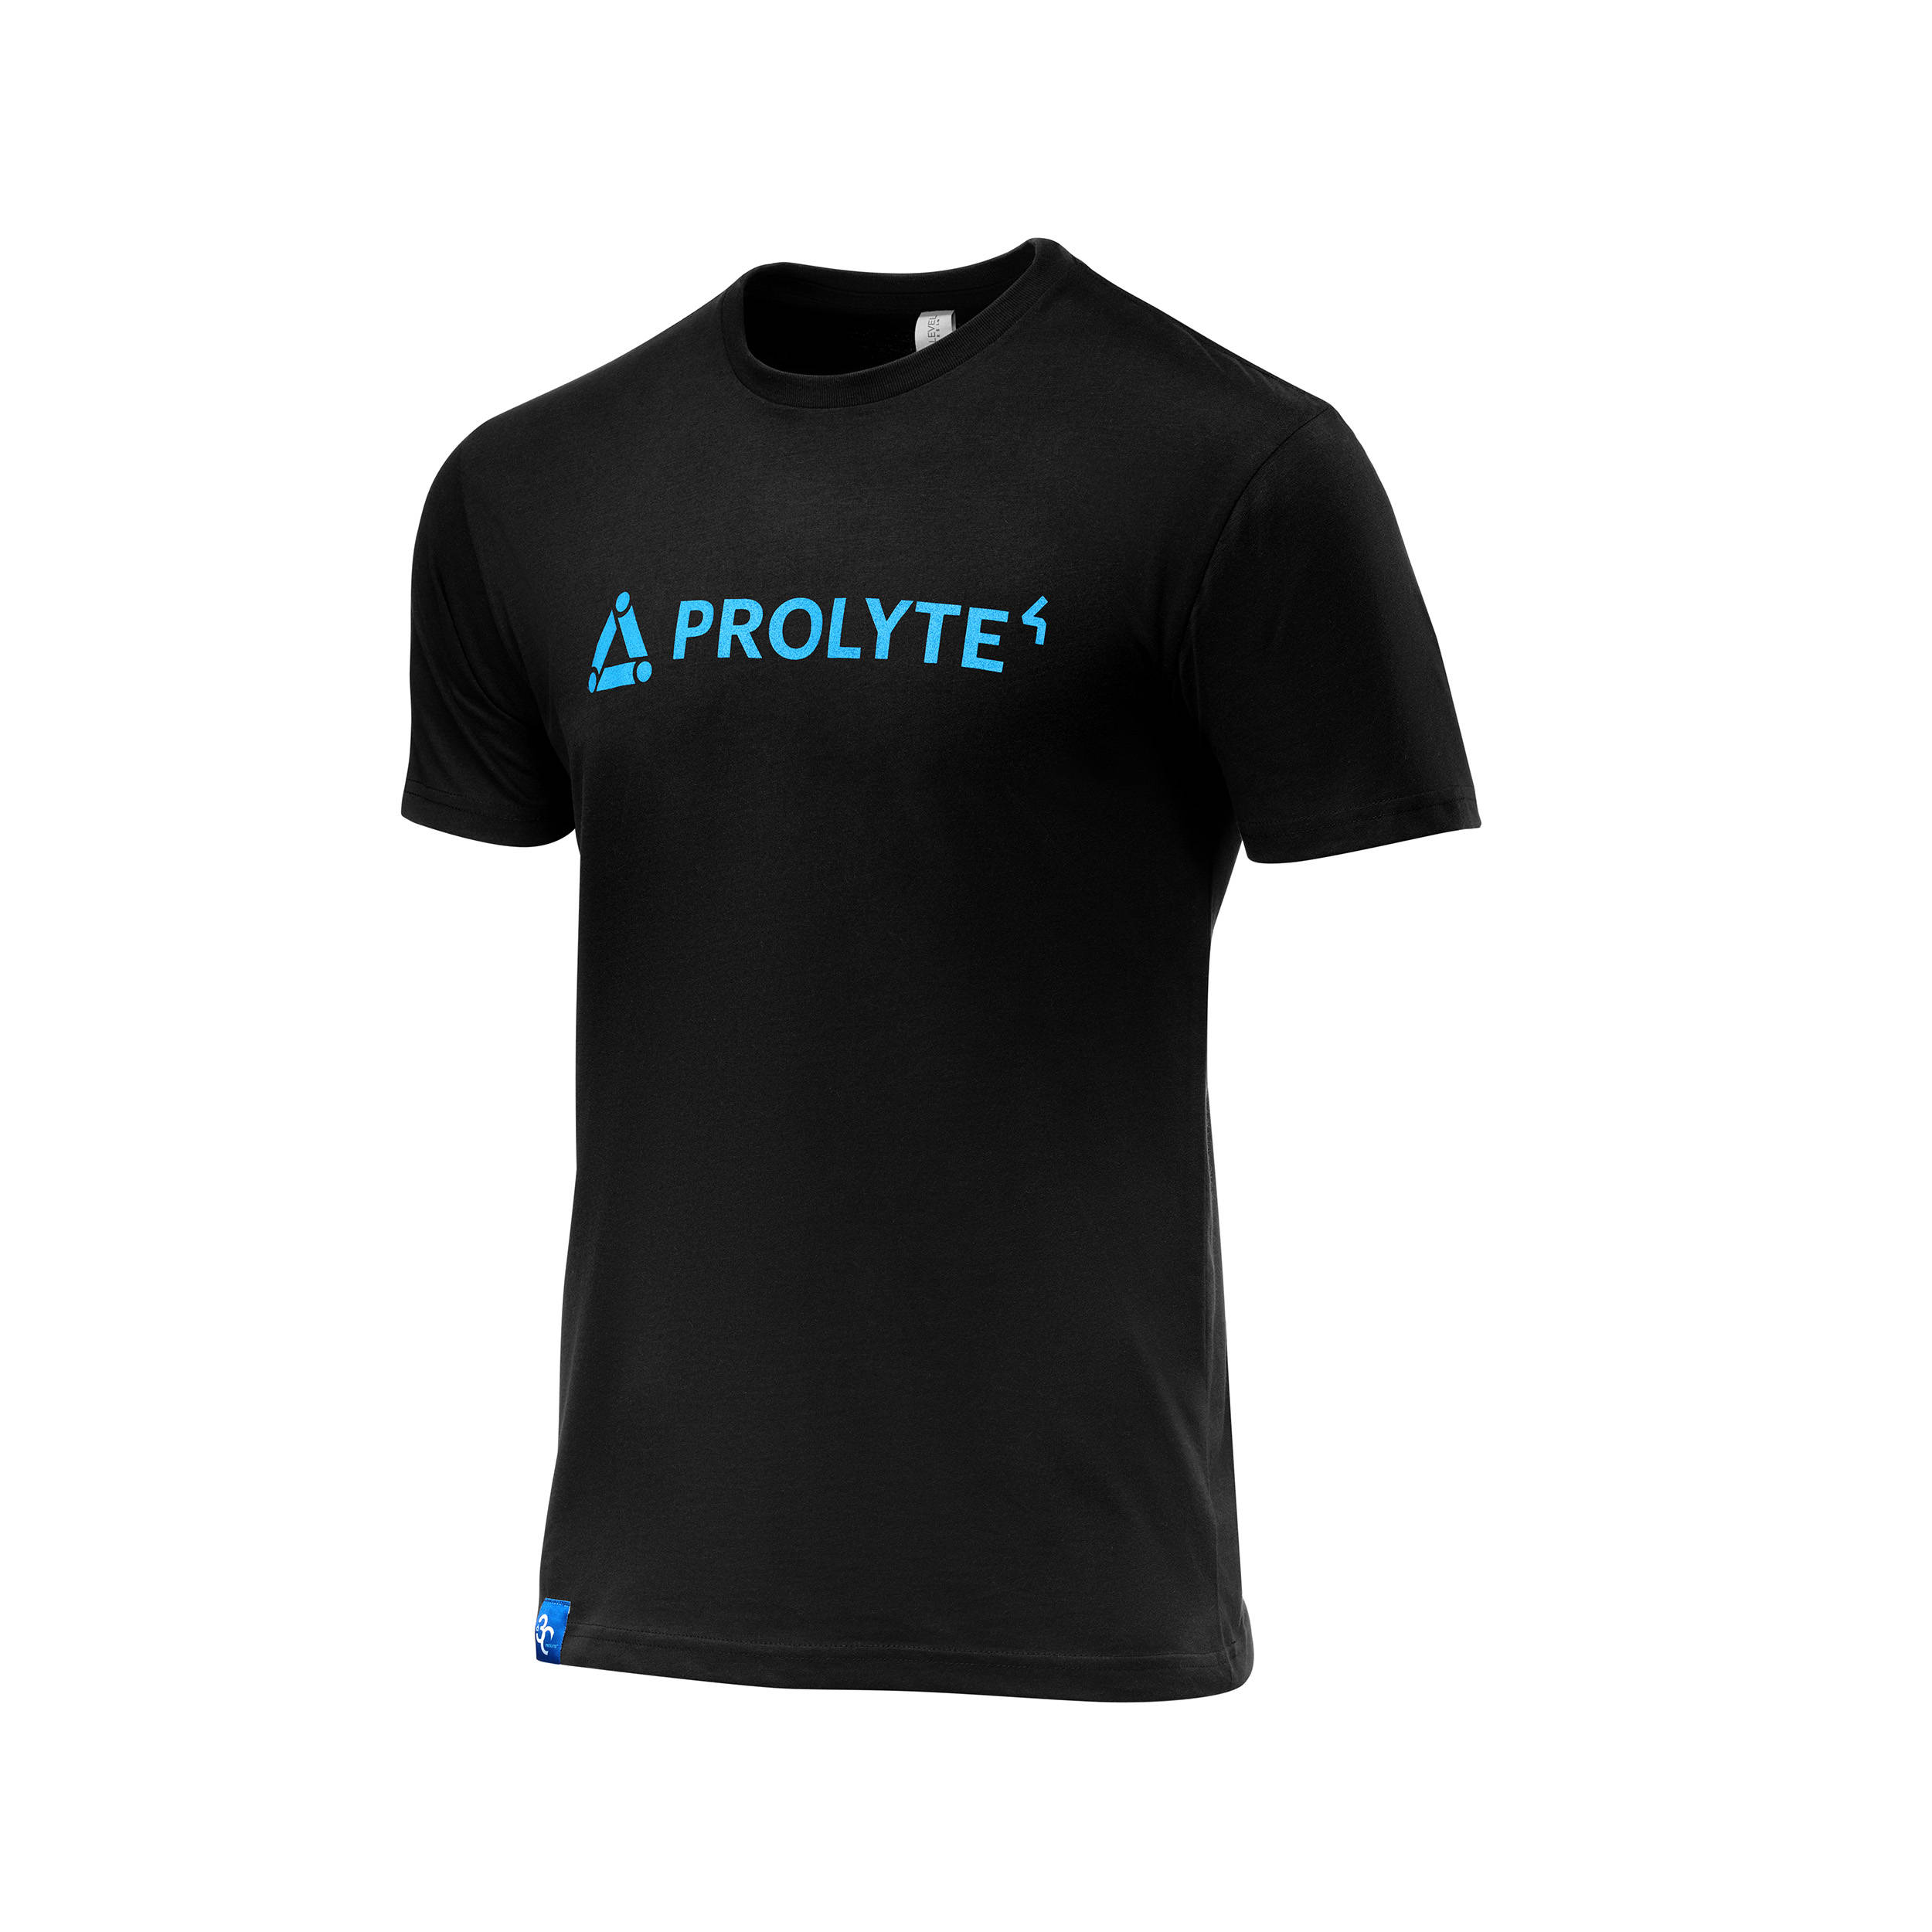 PROLYTE T-shirt